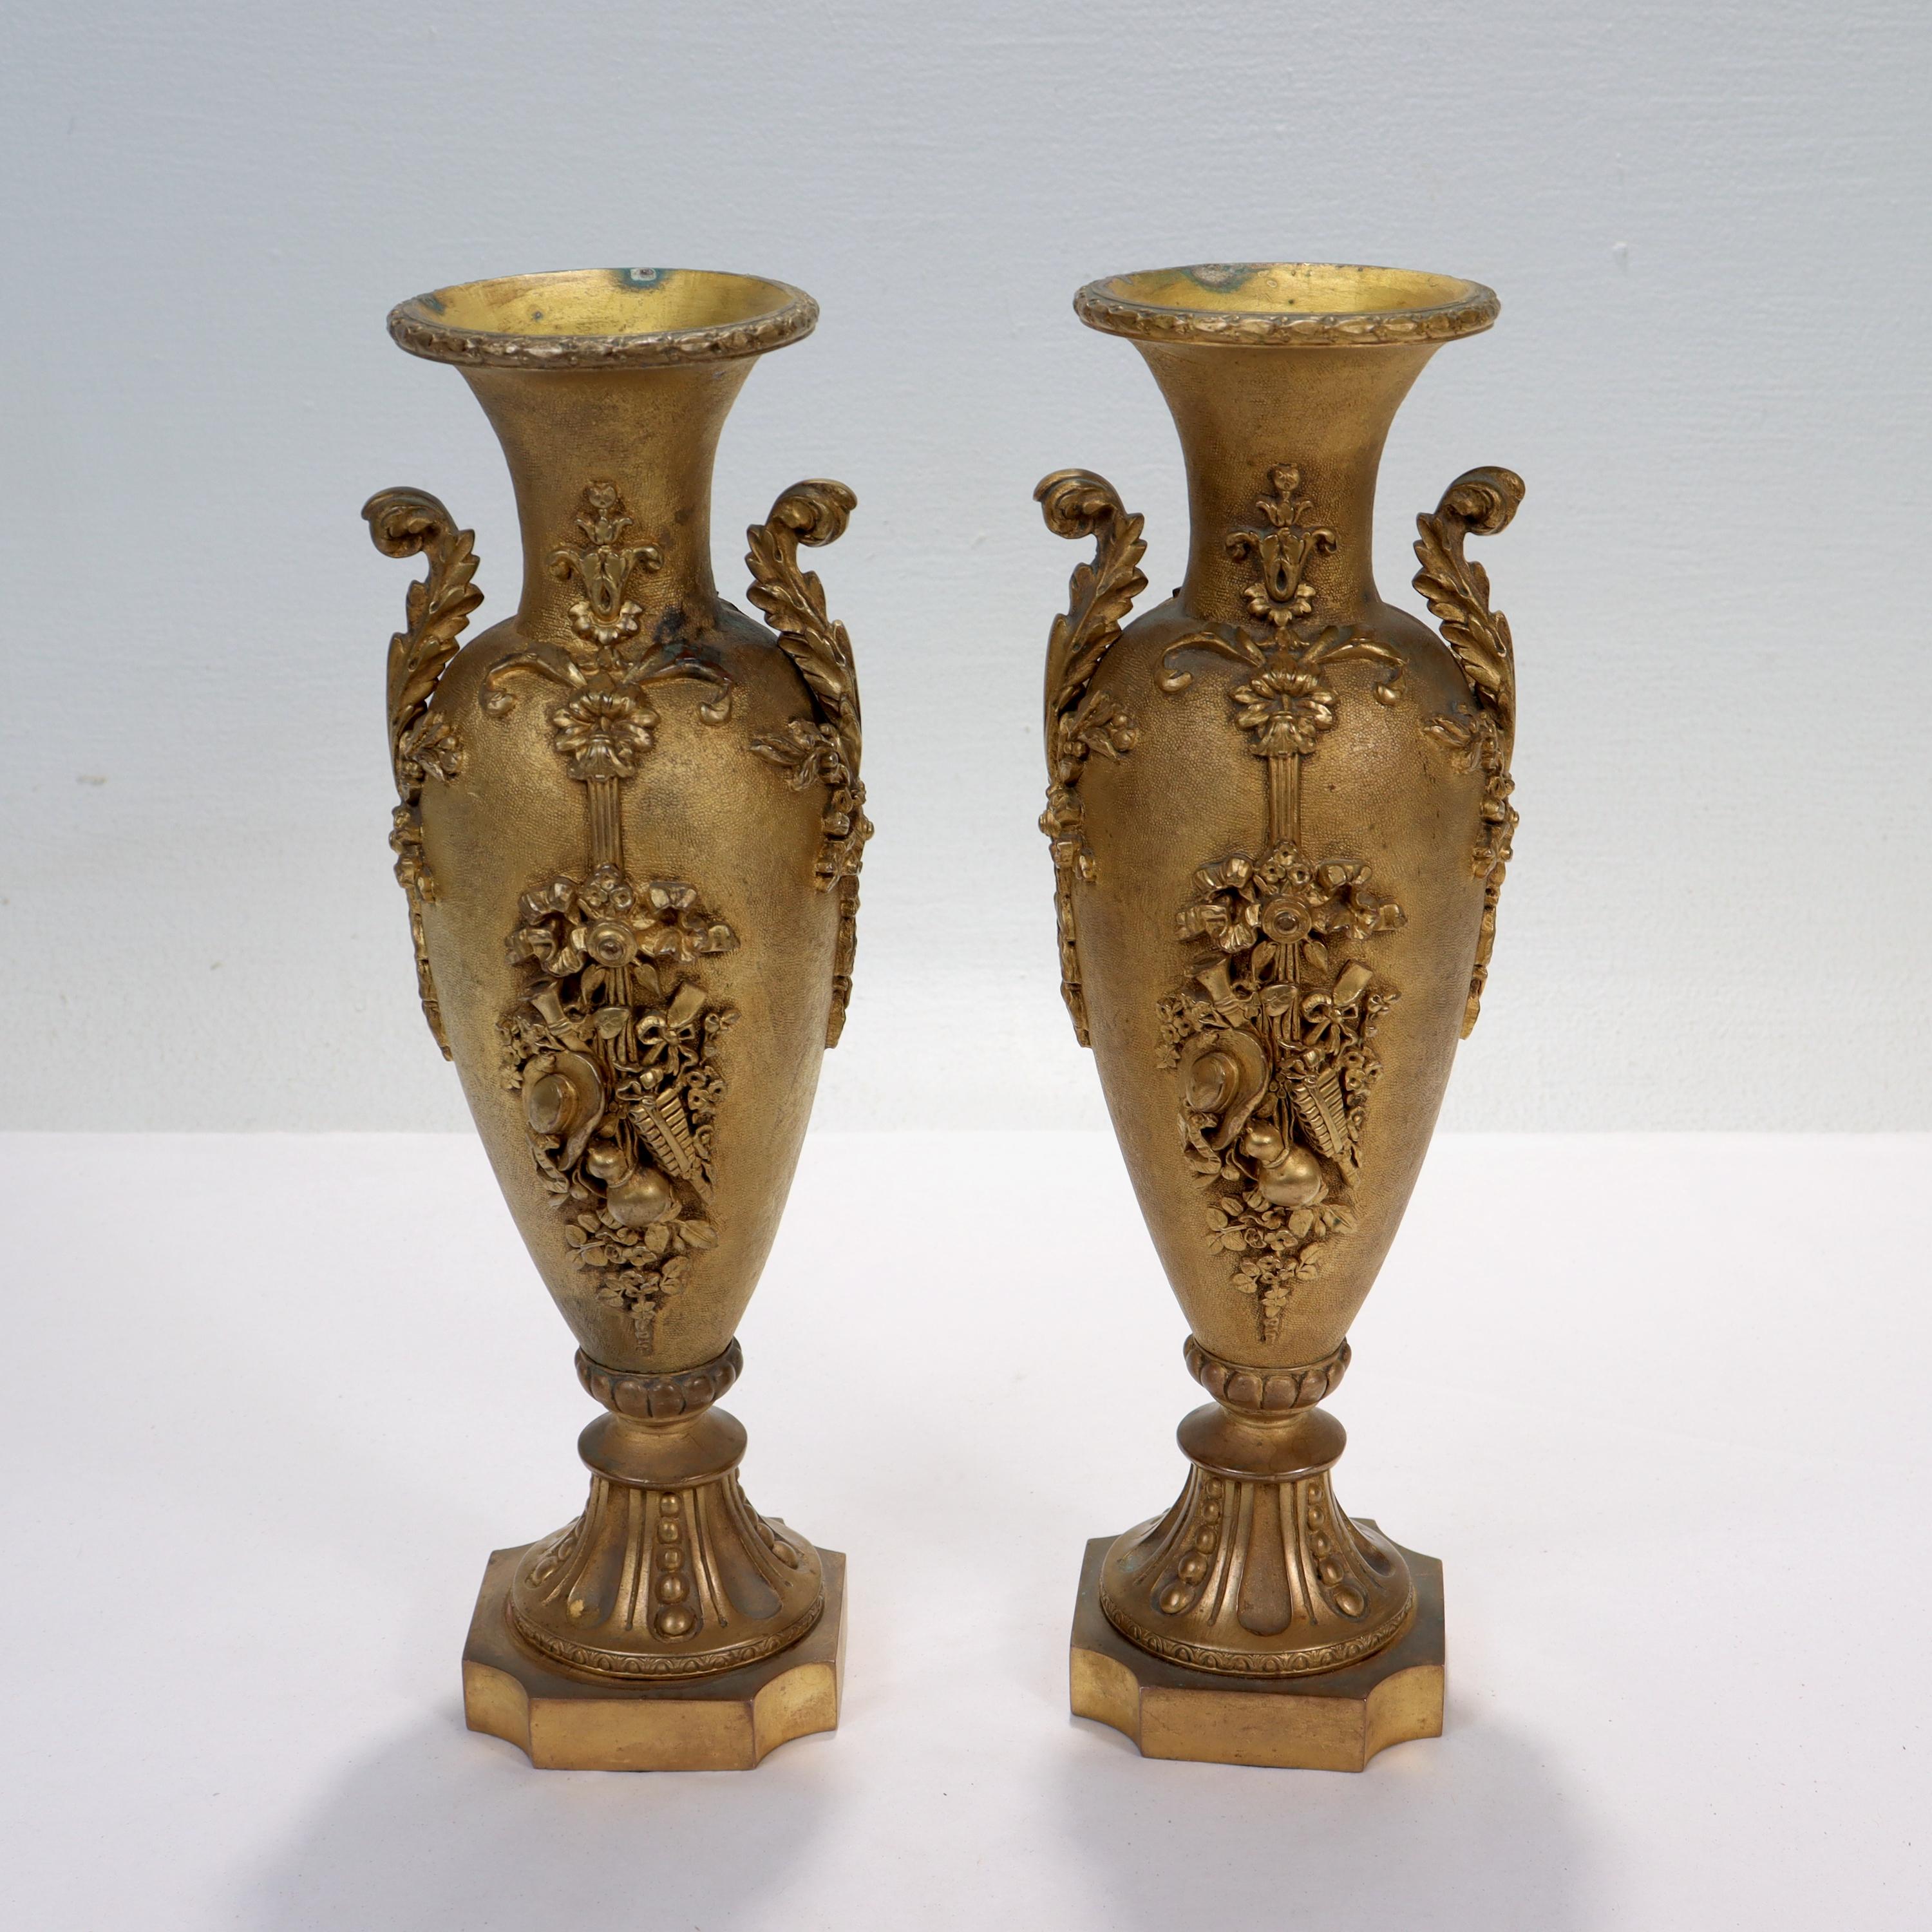 Antique Second Empire French Doré Gilt Bronze Vases or Urns For Sale 2